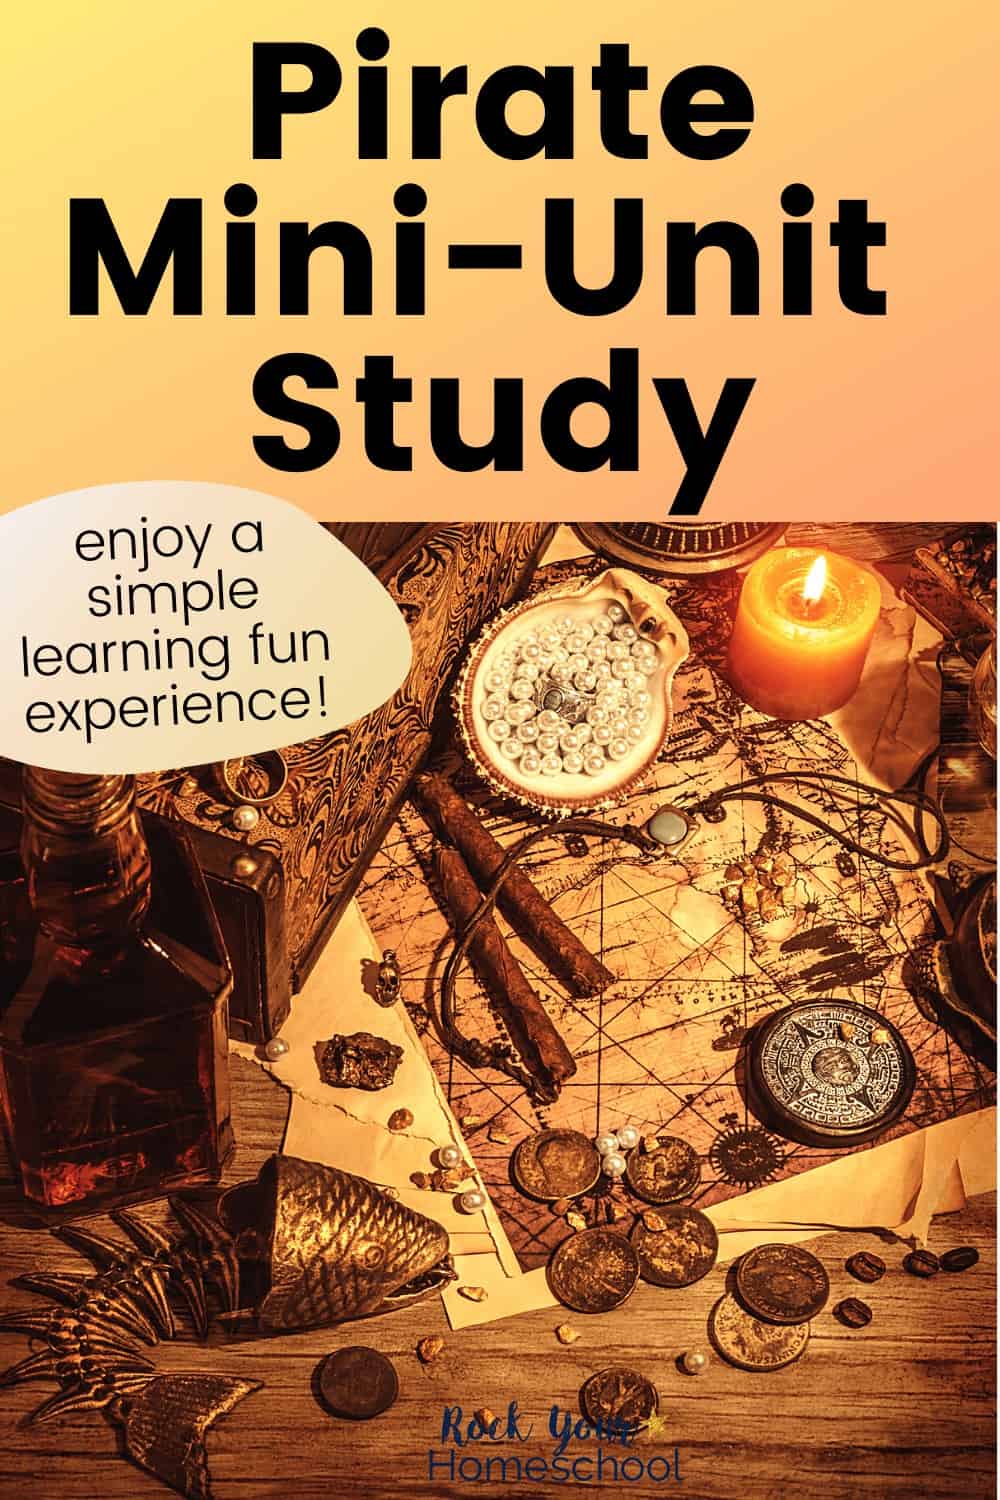 Special Ways to Enjoy a Simple Pirate Mini-Unit Study